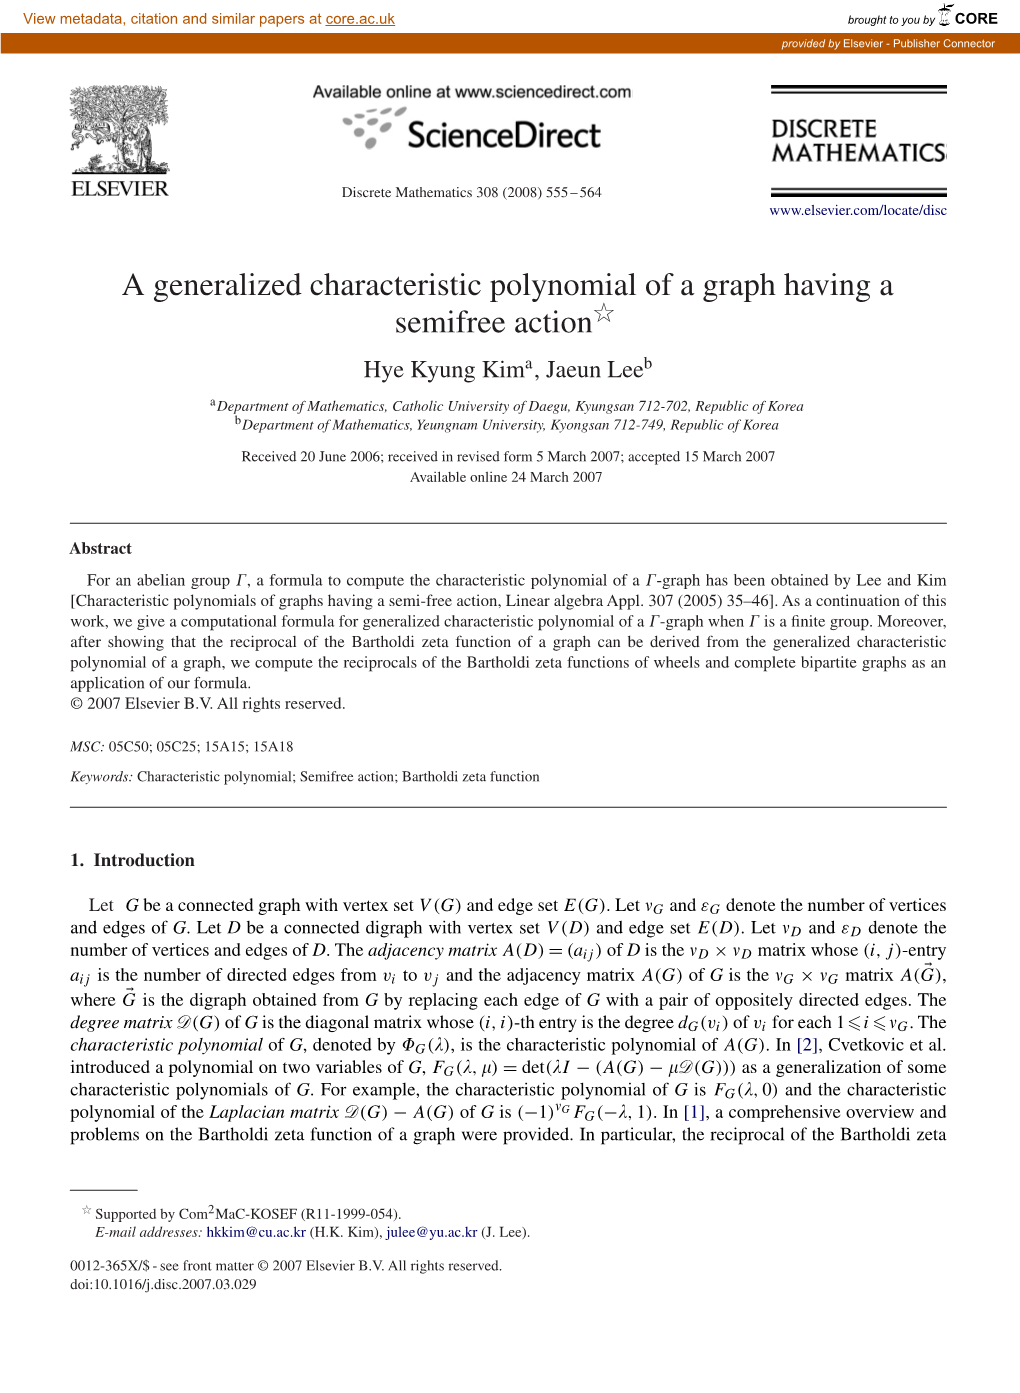 A Generalized Characteristic Polynomial of a Graph Having a Semifree Actionଁ Hye Kyung Kima, Jaeun Leeb